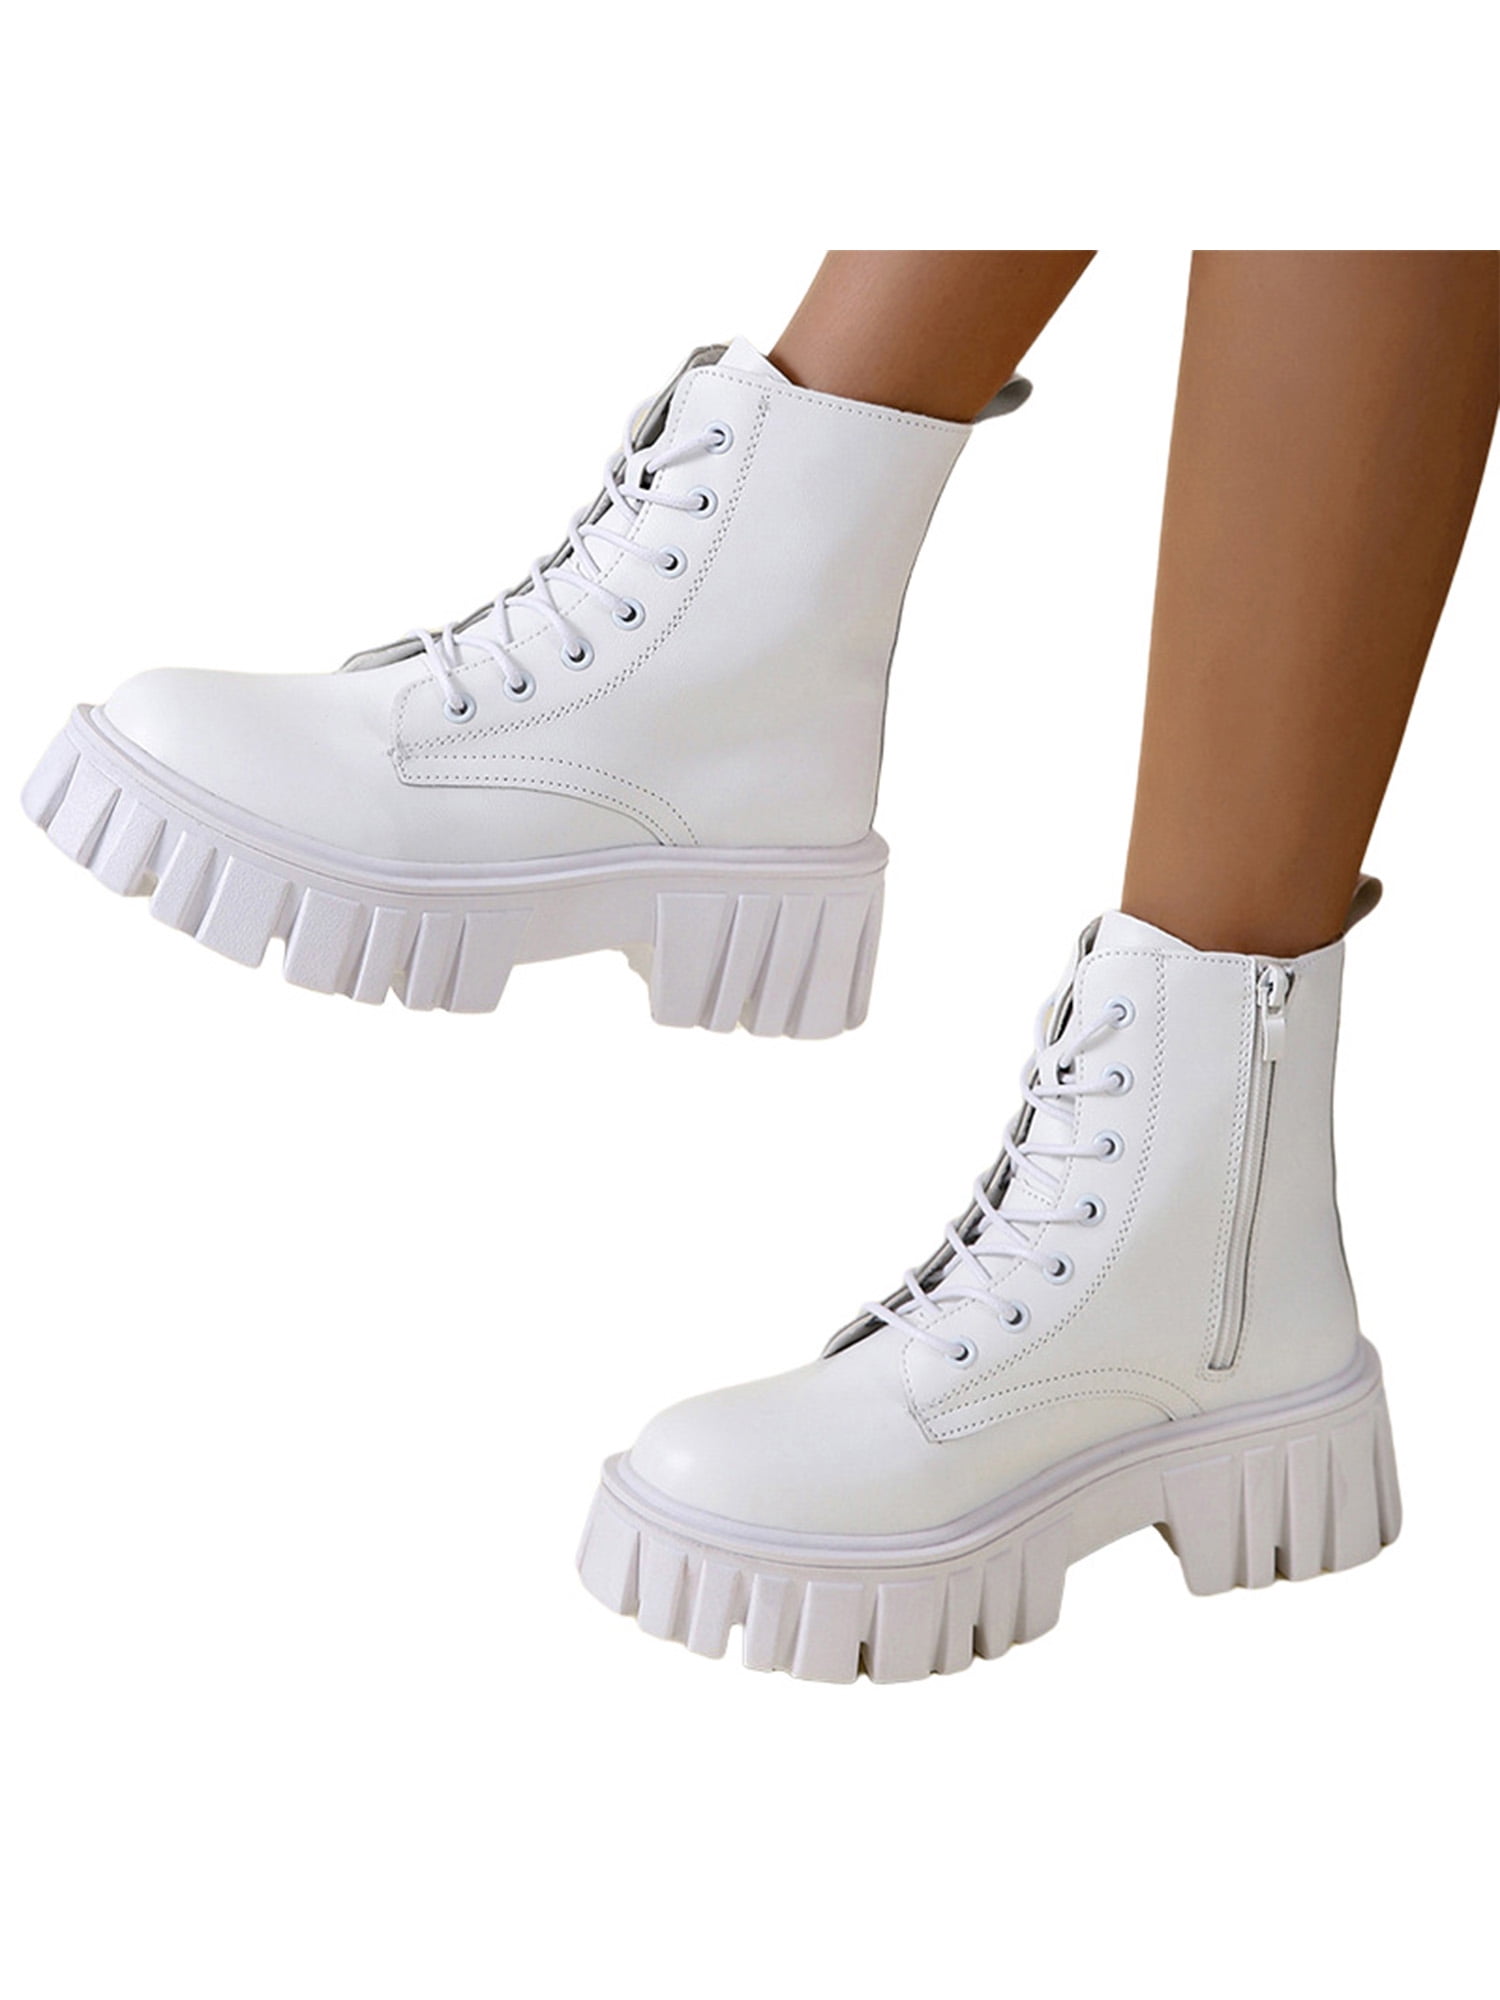 GIY Womens Buckle Round Toe Chunky Heeled Ankle Booties Side Zip Casual Platform Block Heel Shoes 